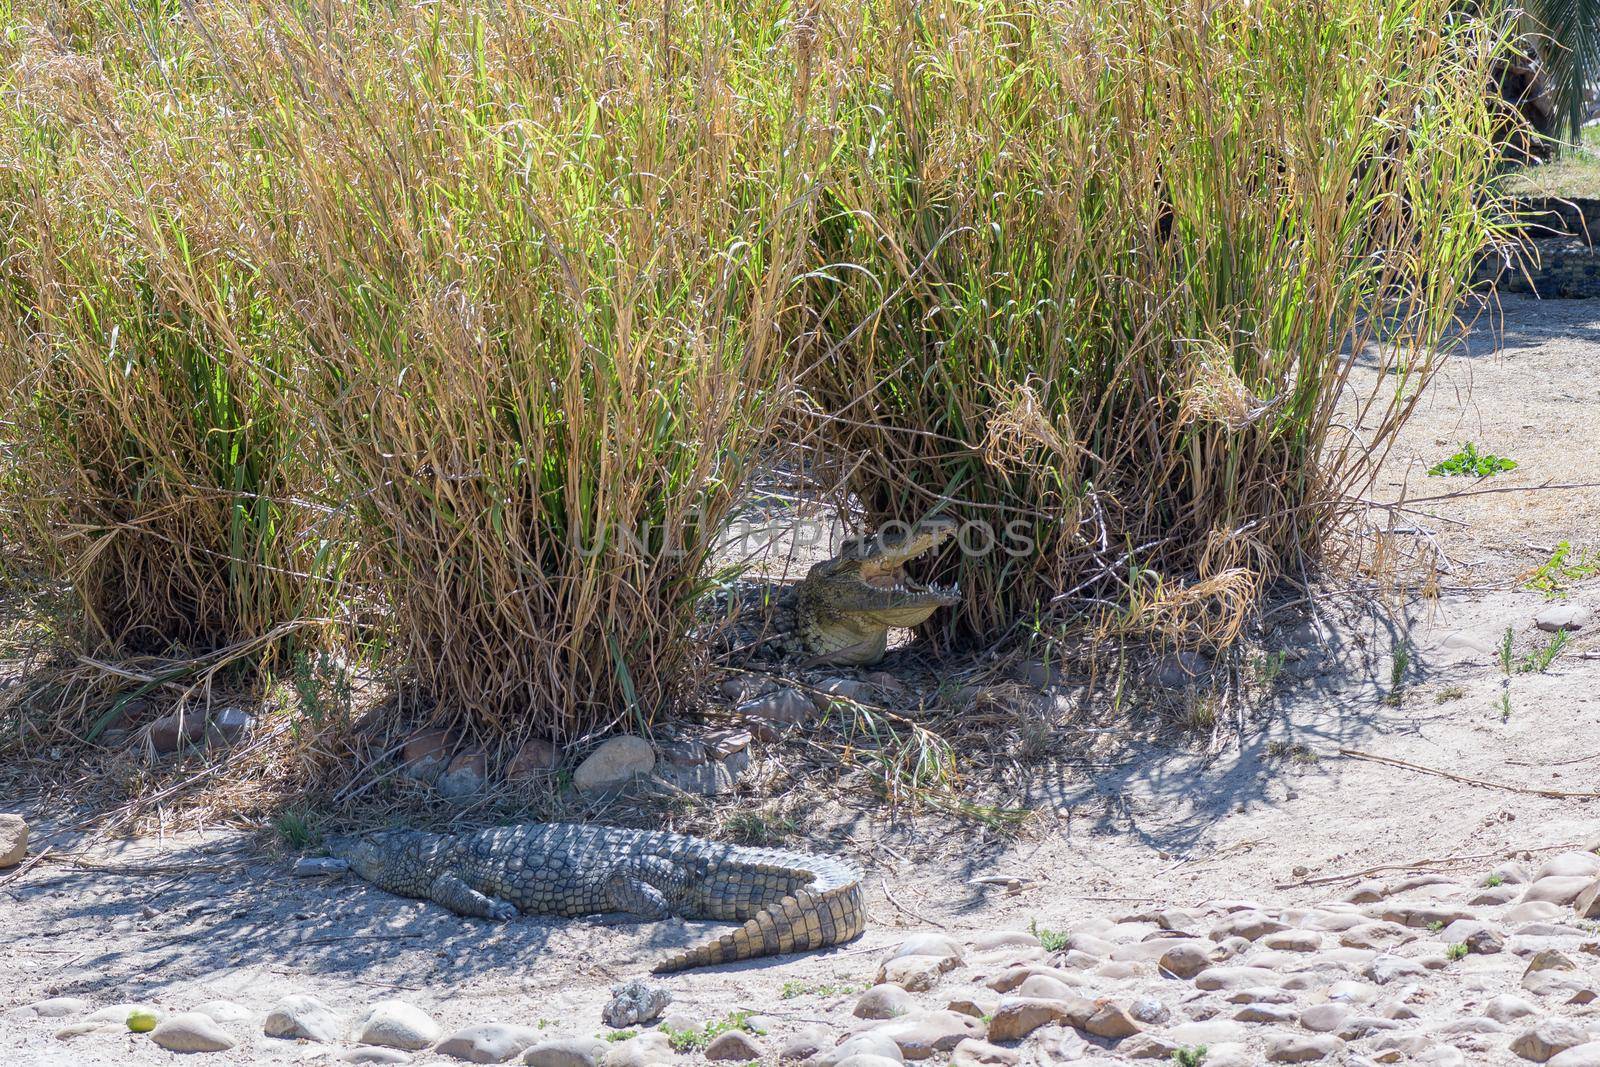 Nile crocodile, Crocodylus niloticus, on sand between reeds by dpreezg